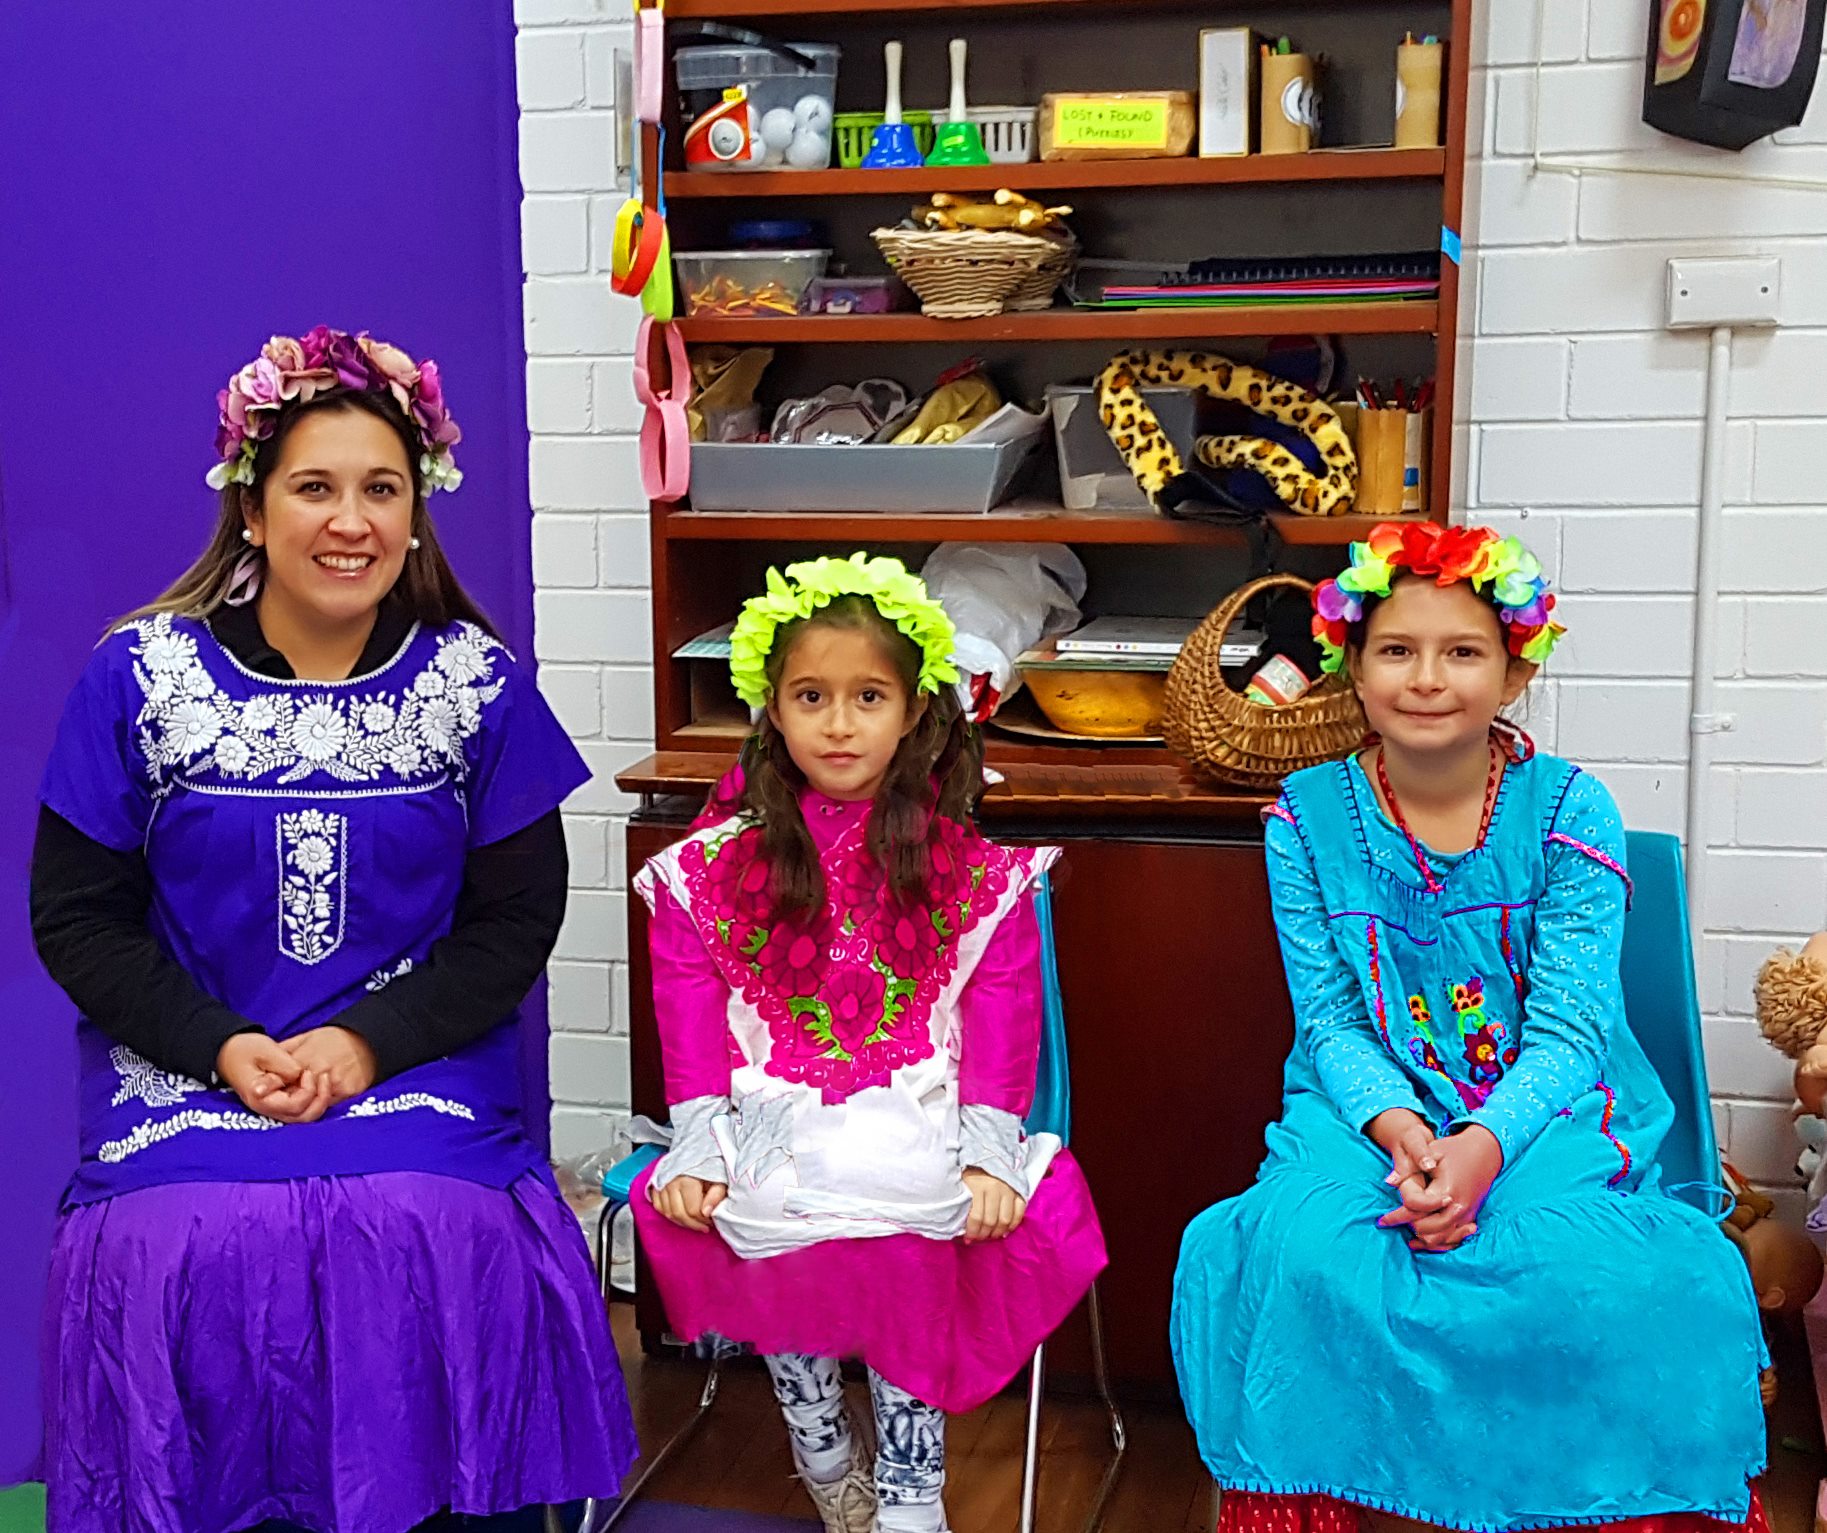 Latin American Fiesta aims to inspire through celebrating ‘Queen Frida’